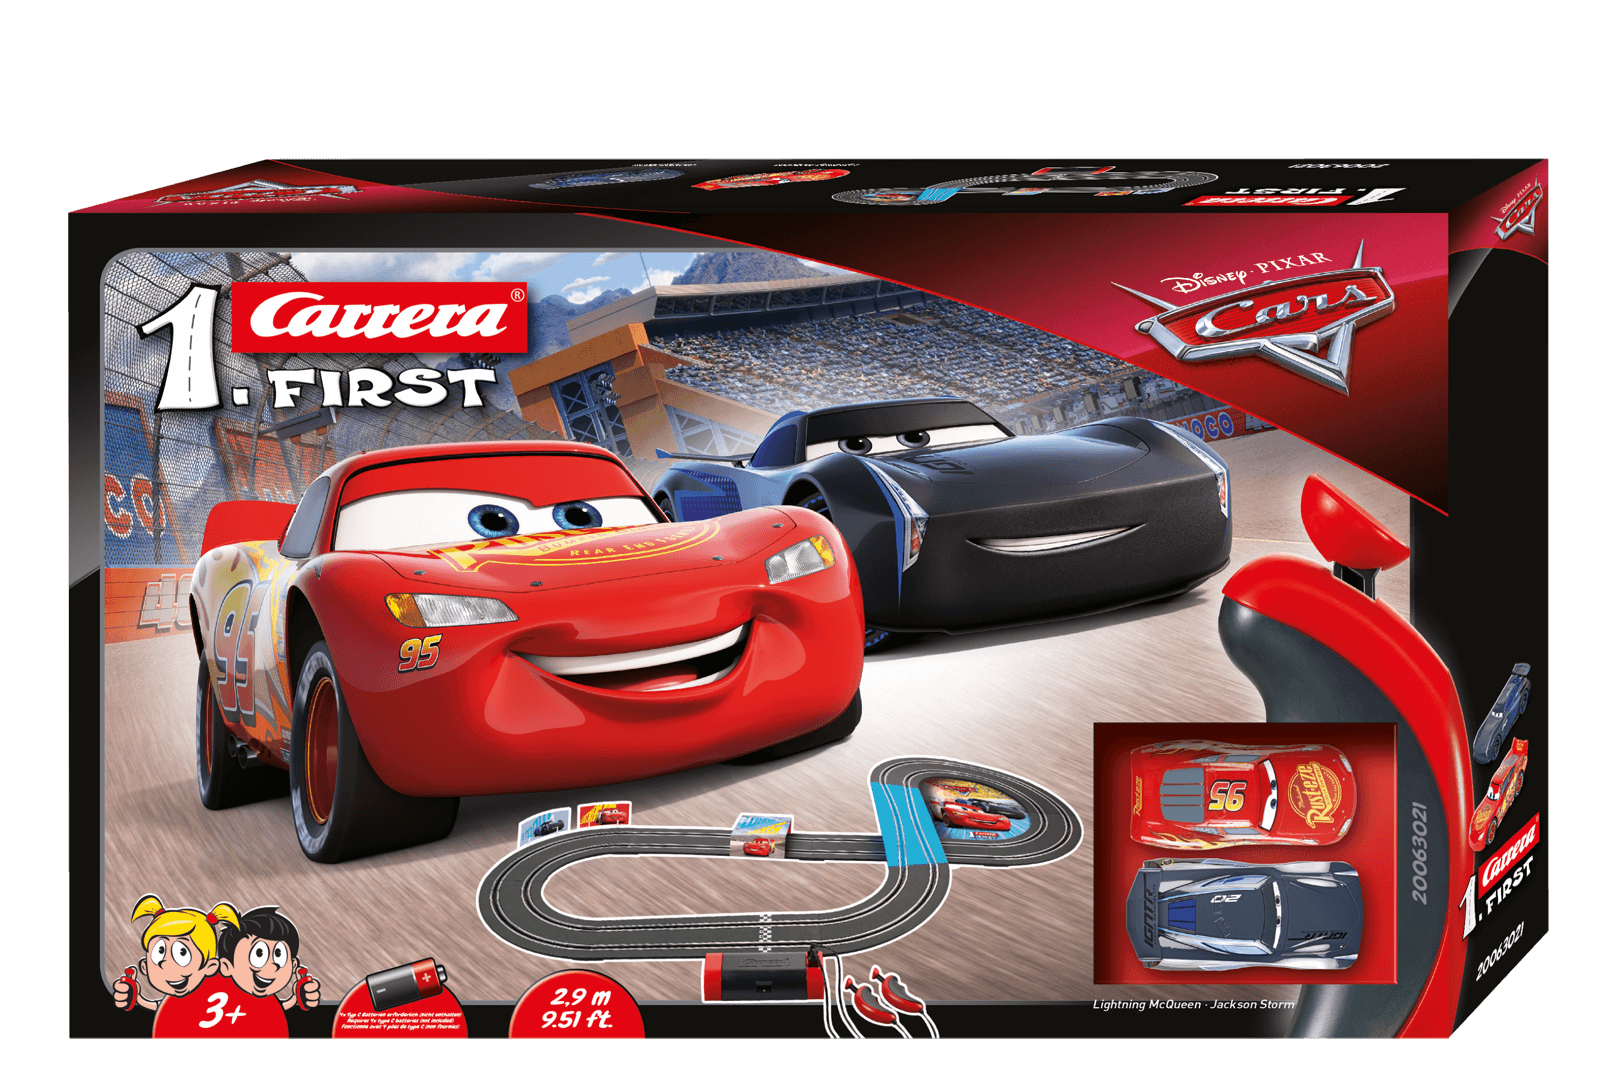 Pista Carrera First Disney Pixar Cars ( Mcqueen+ Storm) 2,9 m